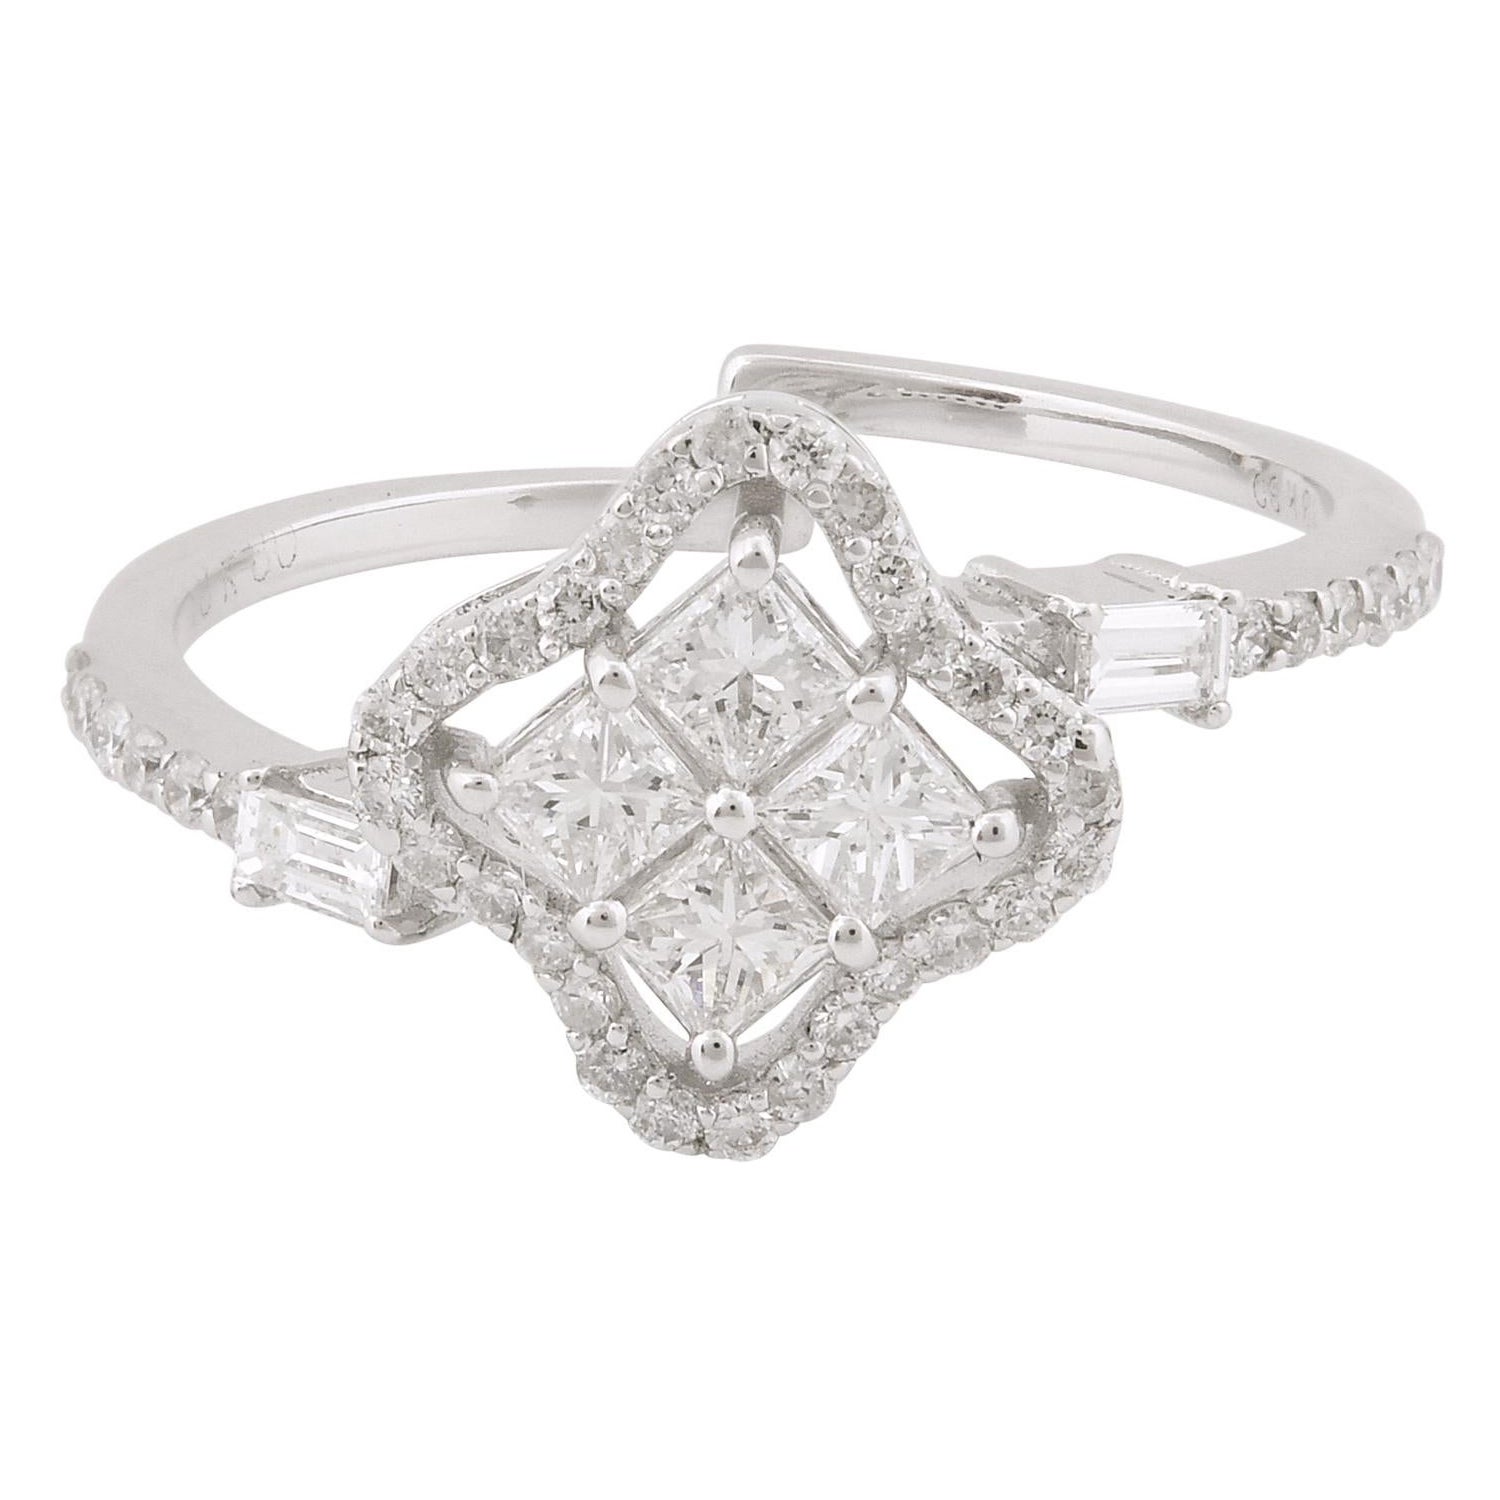 0.67 Carat Princess Cut Diamond Clover Ring Solid 18k White Gold Fine Jewelry